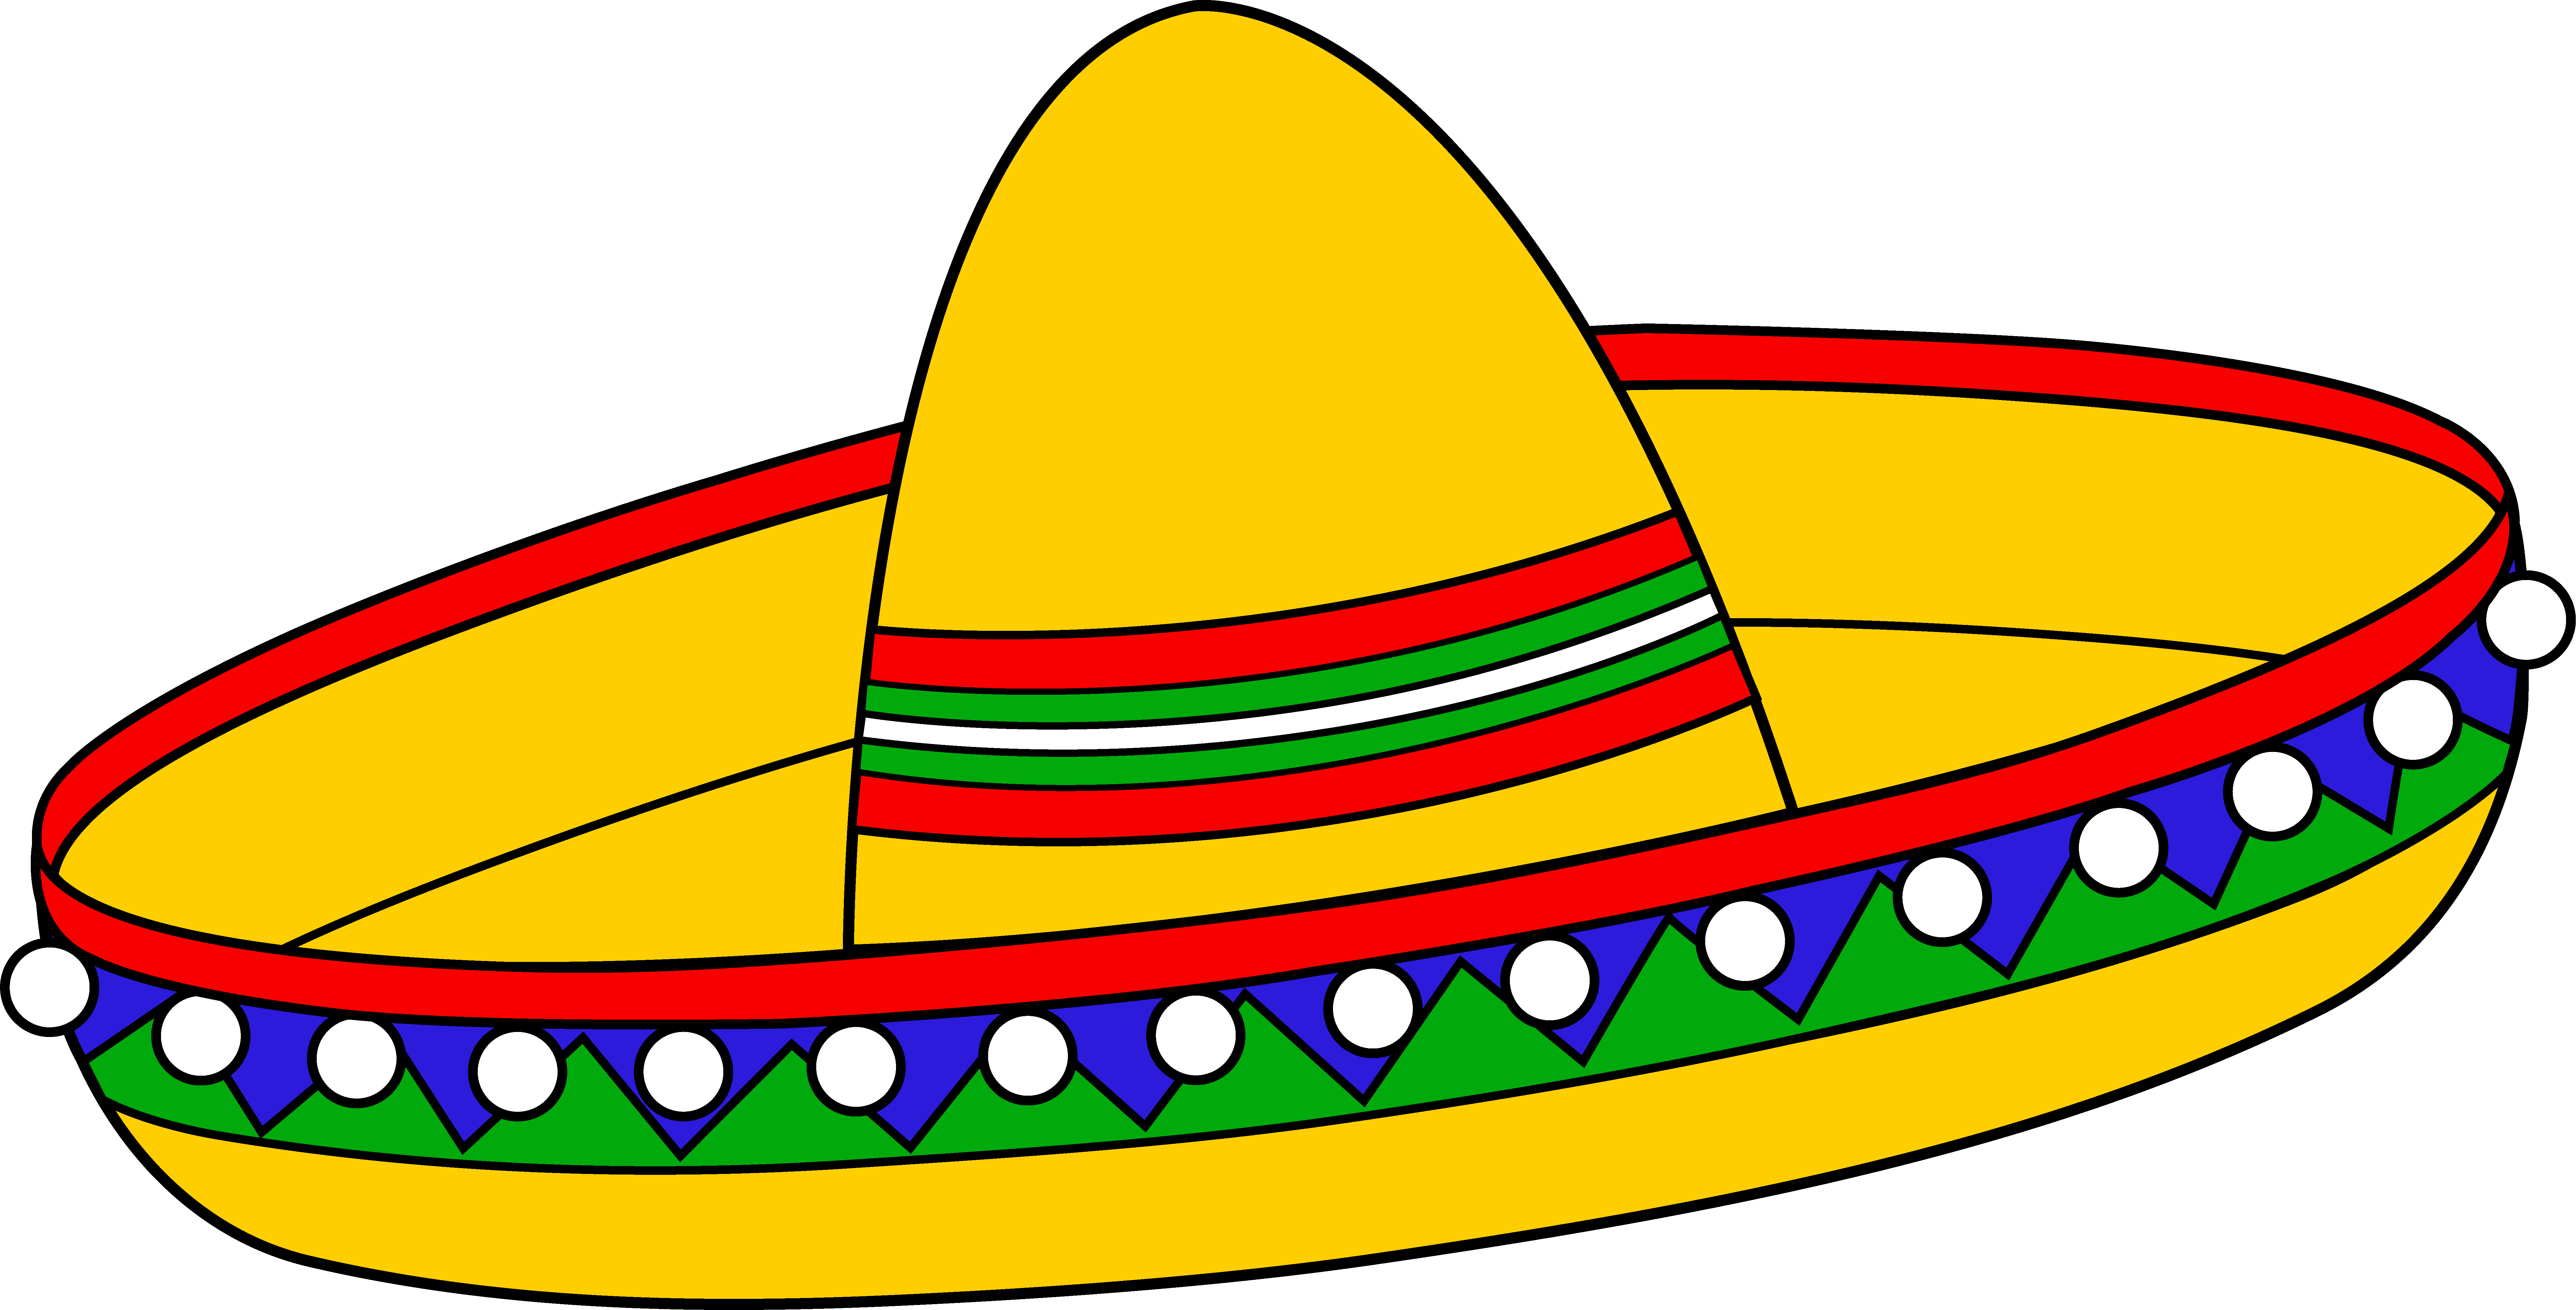 Class clipart fiesta. Colorful mexican sombrero hat